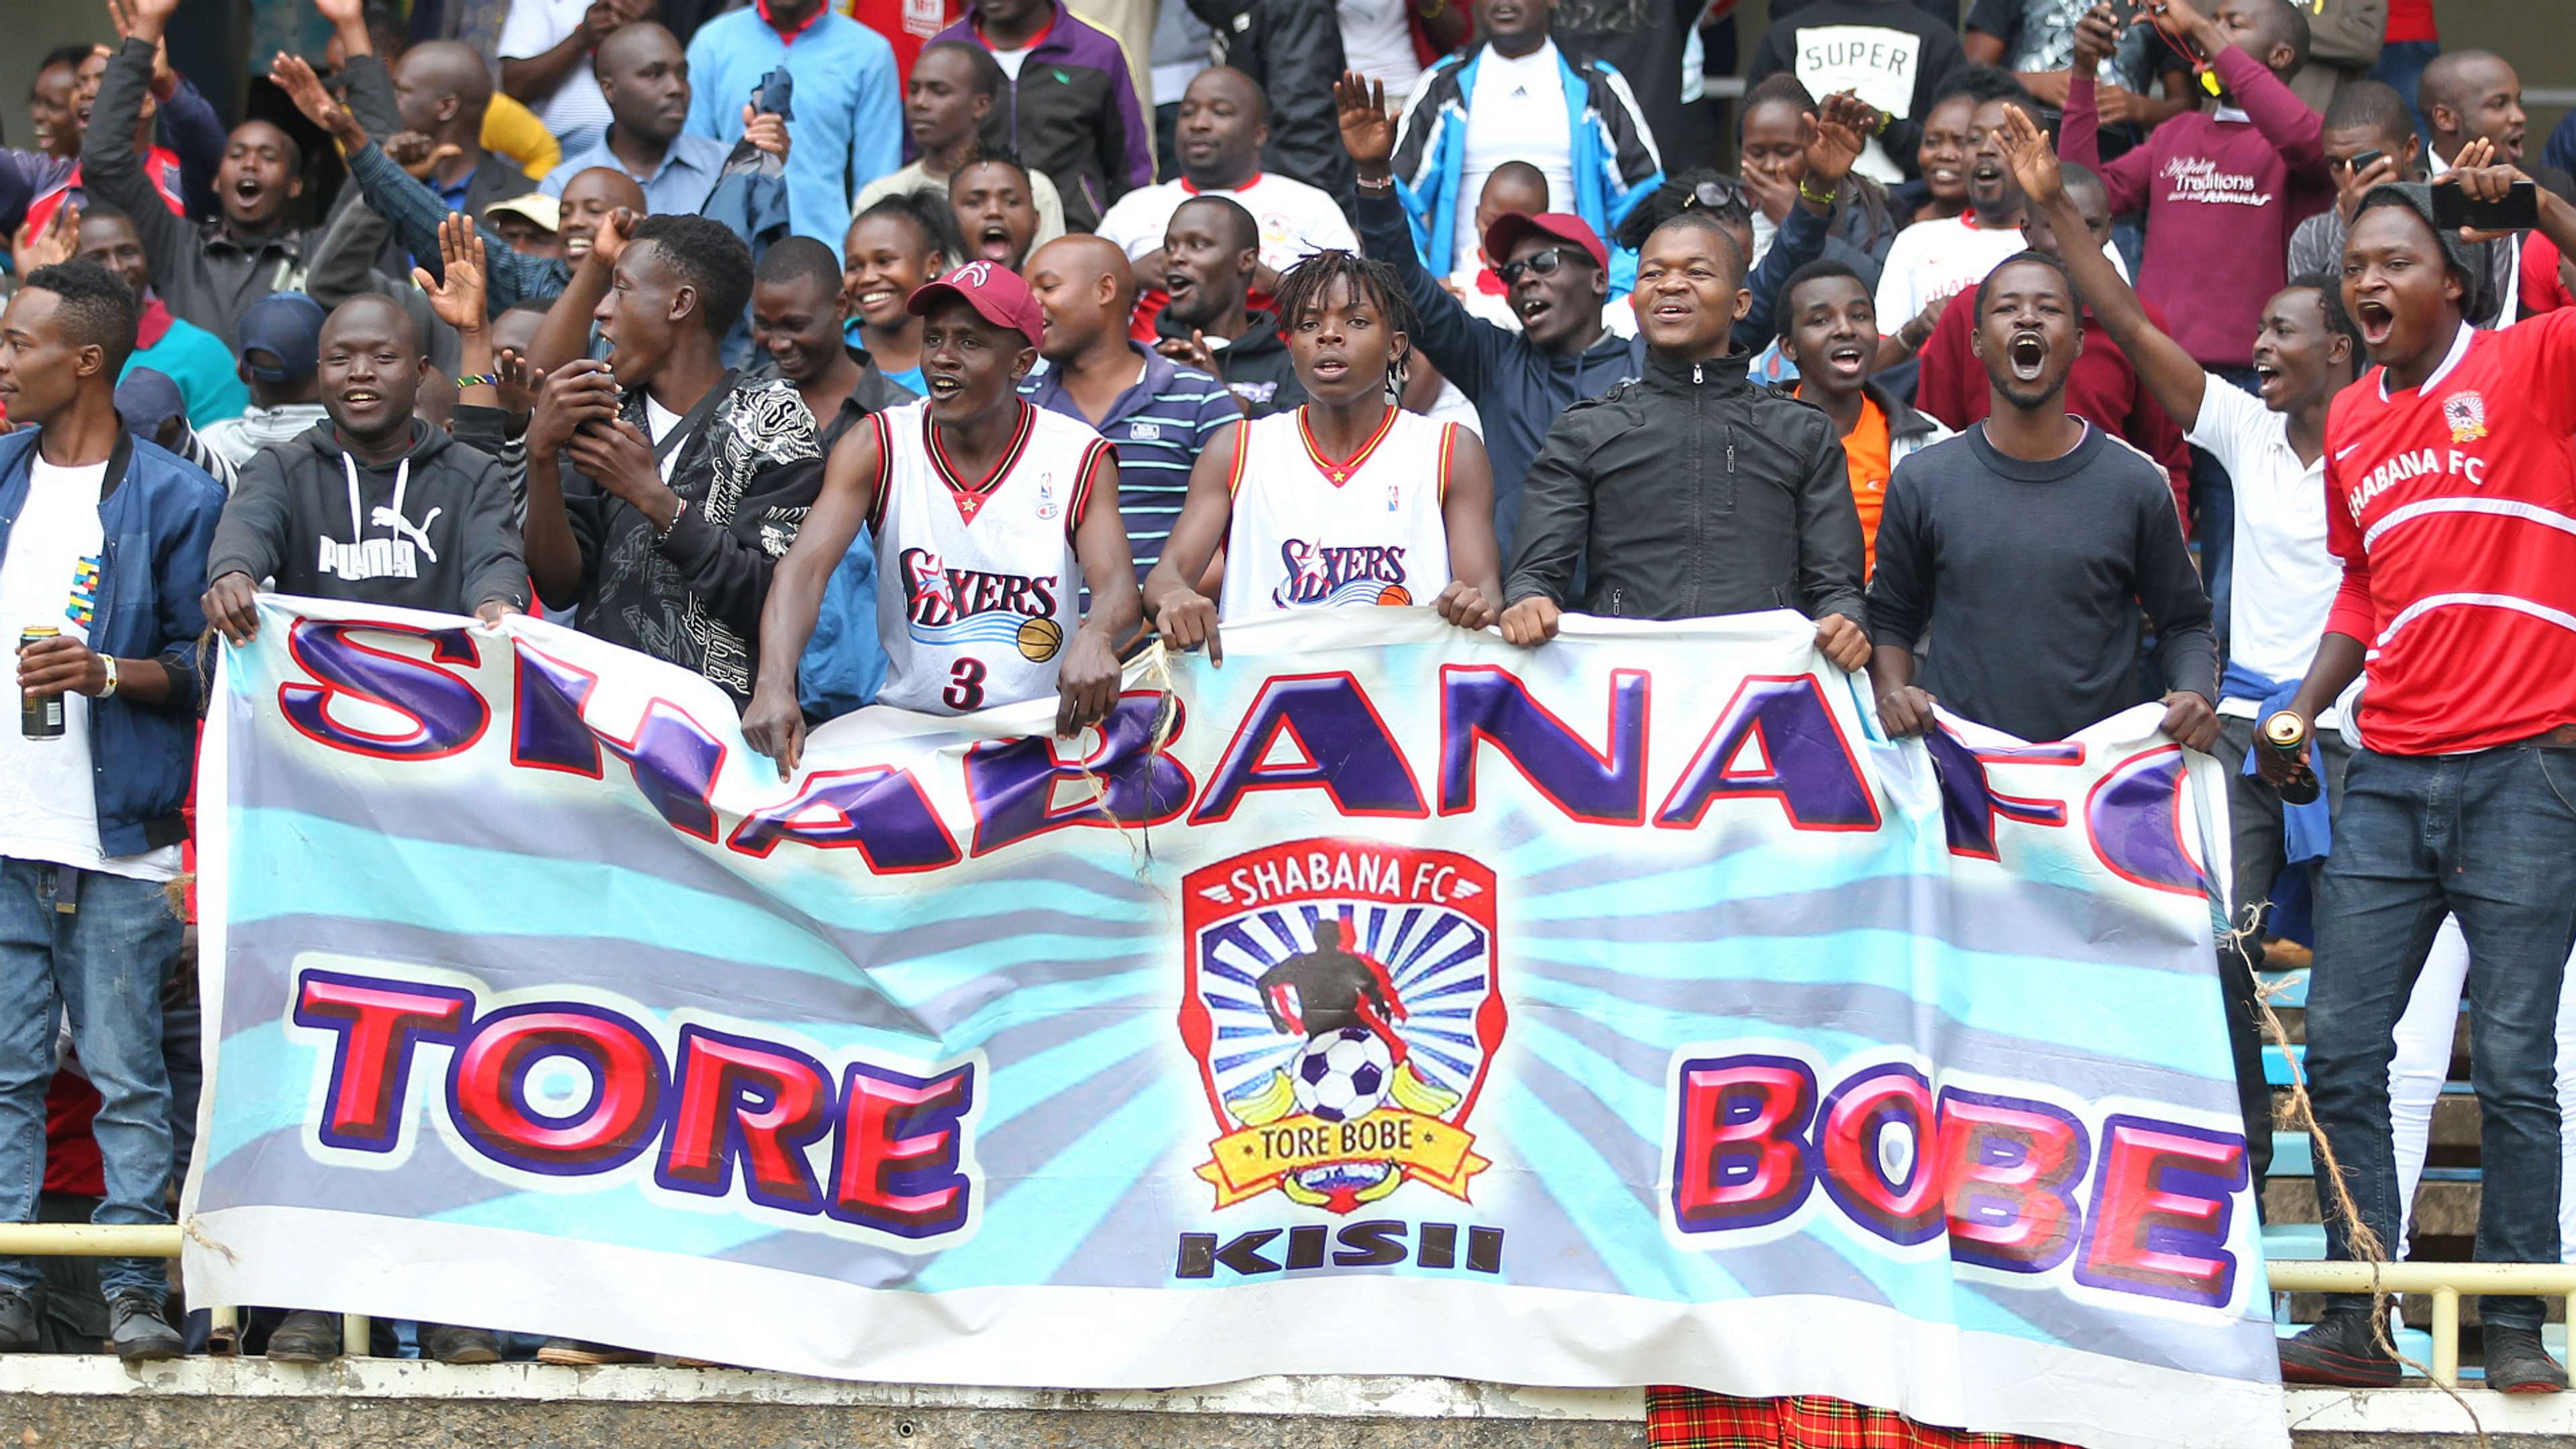 Shabana FC fans at Kasarani.